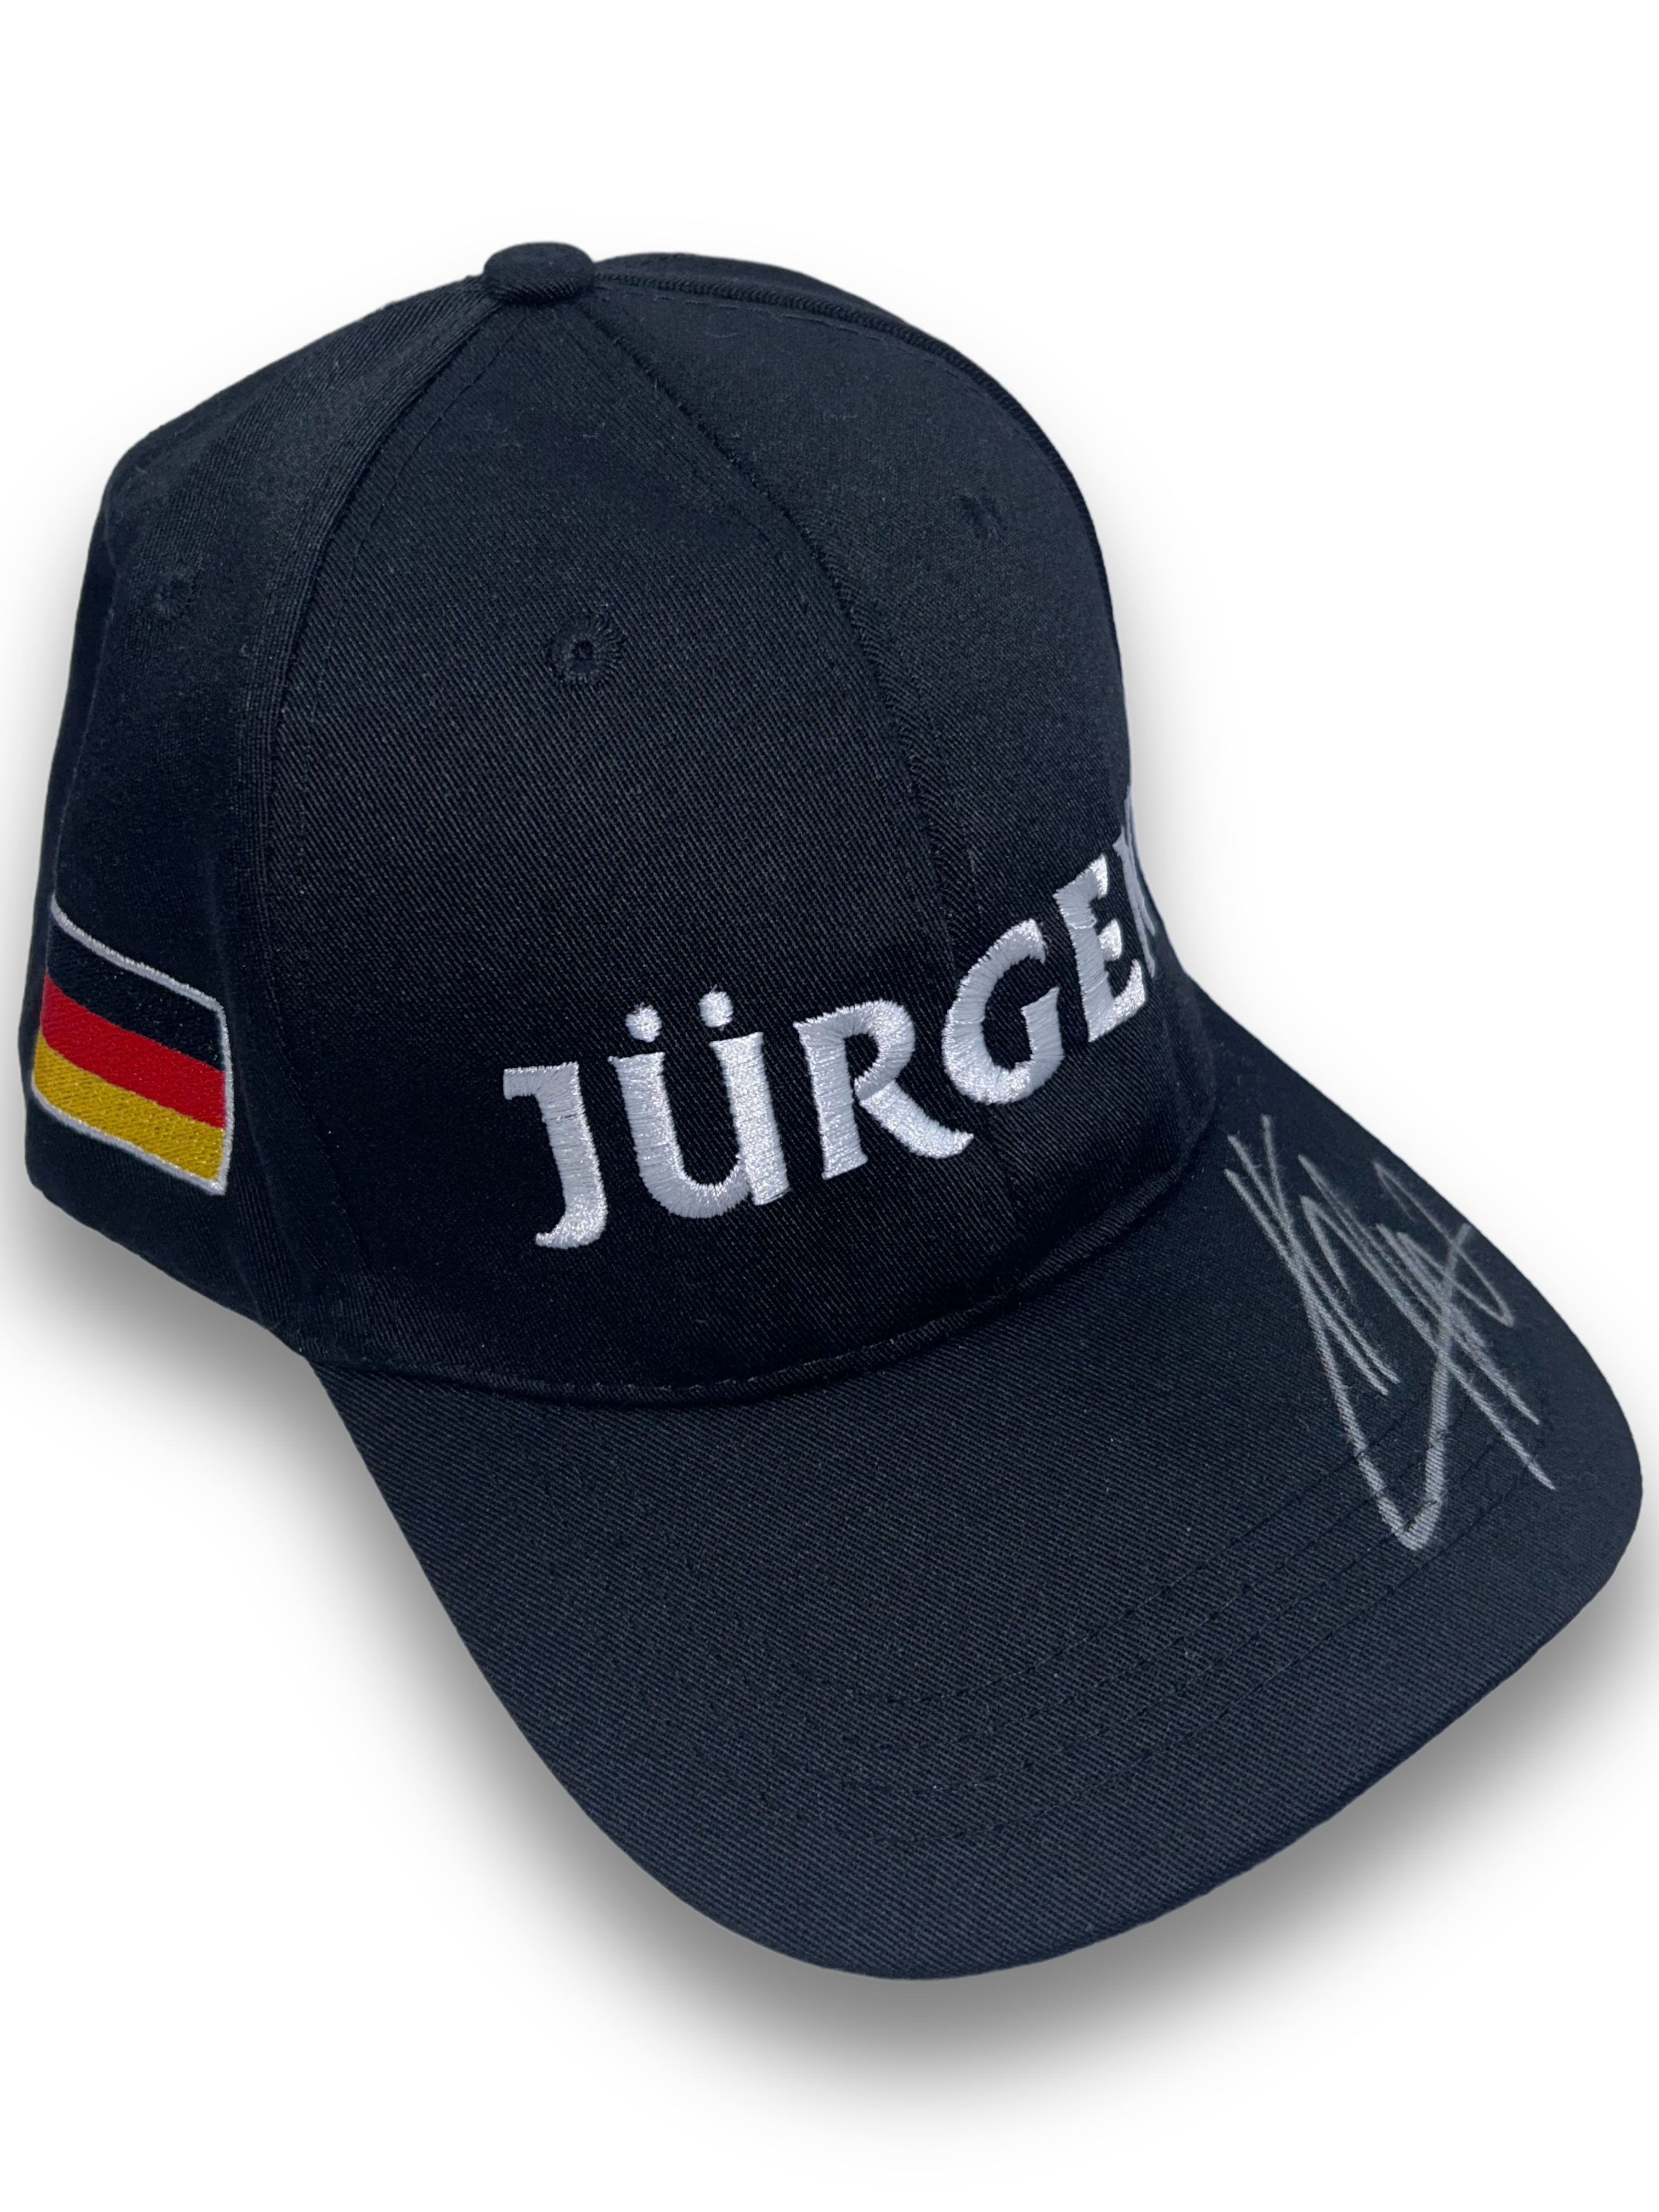 JURGEN KLOPP SIGNED LIVERPOOL FC JURGEN GERMANY CAP 2 (AFTAL COA)